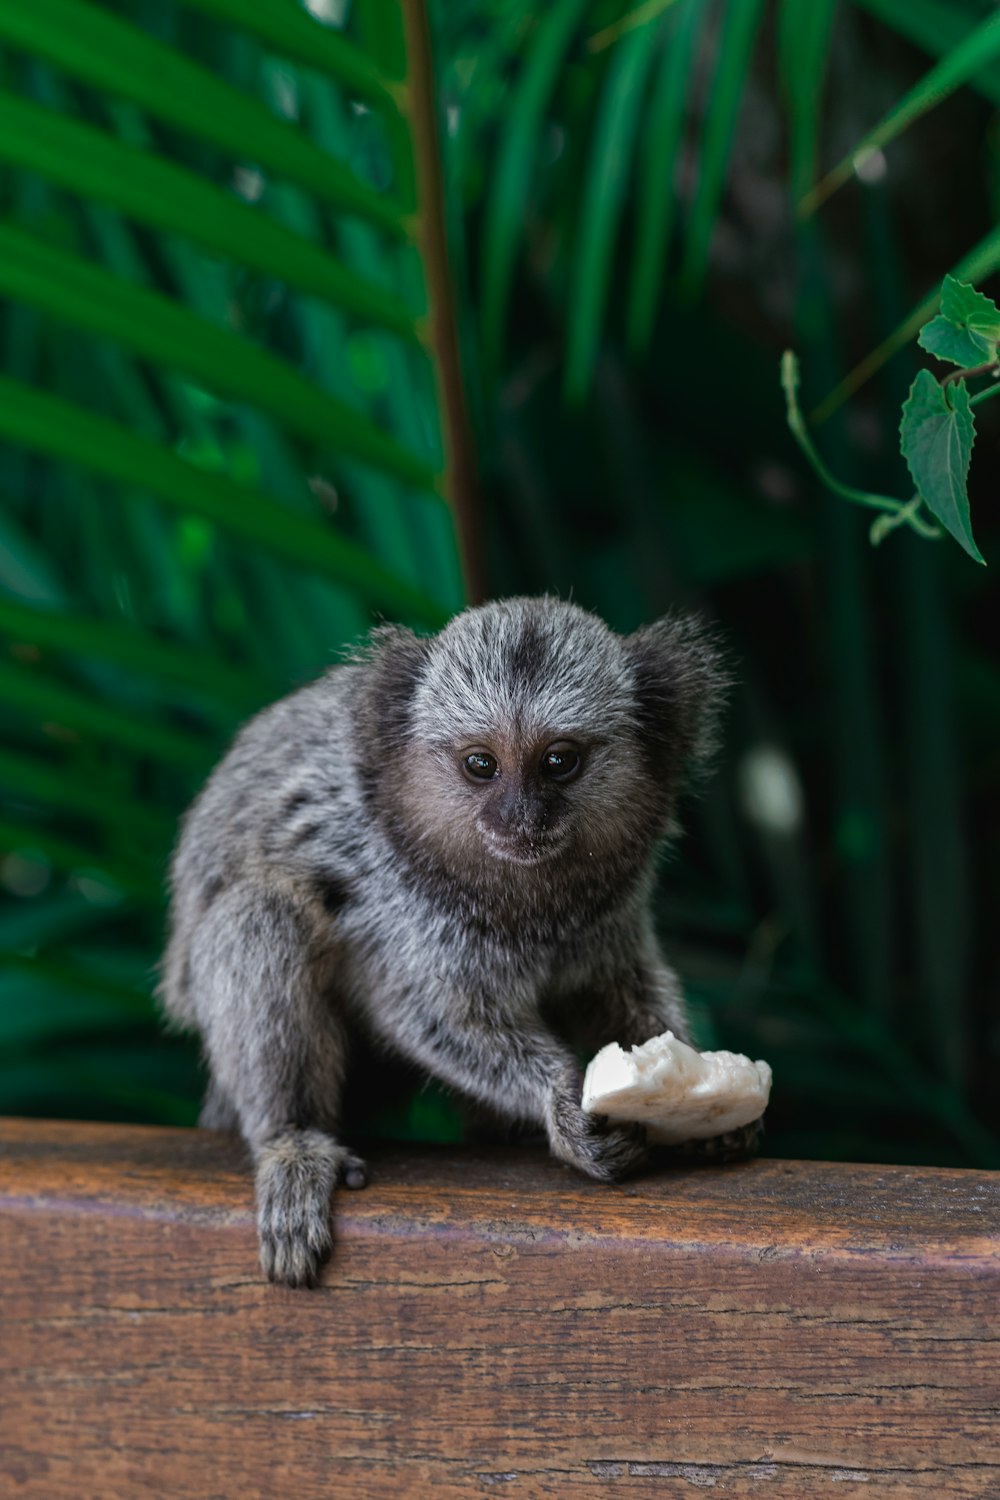 a small monkey sitting on a ledge eating a banana